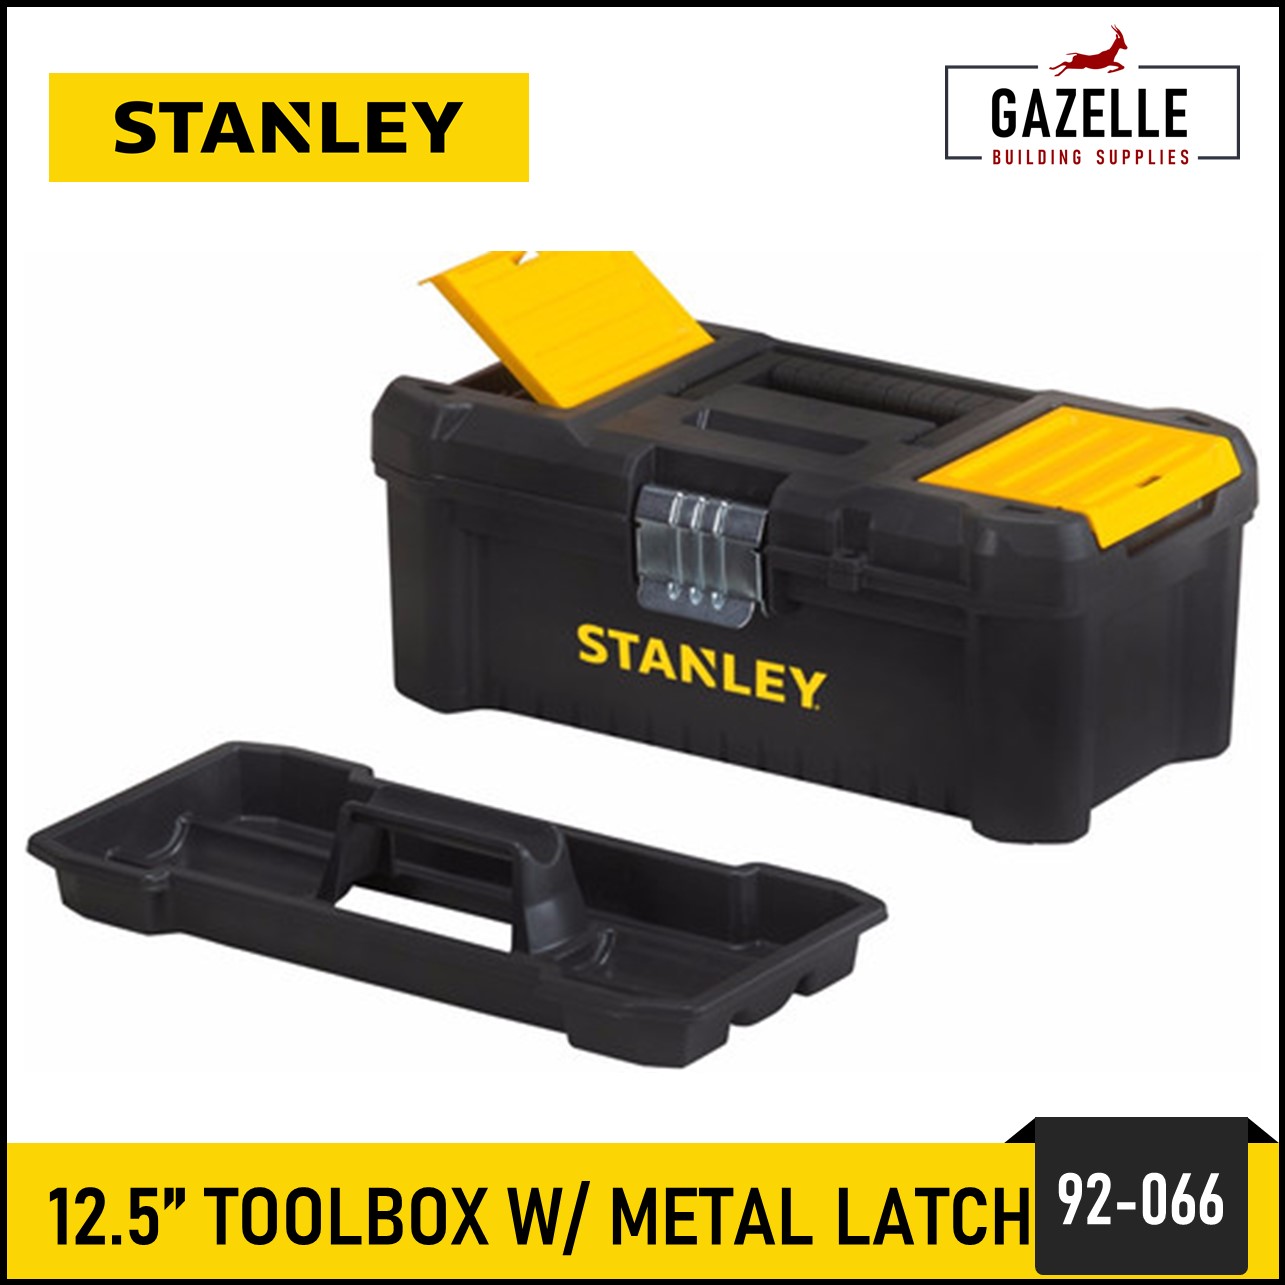 STANLEY Toolbox 12.5 Metal Latch Tool Box - 75-515